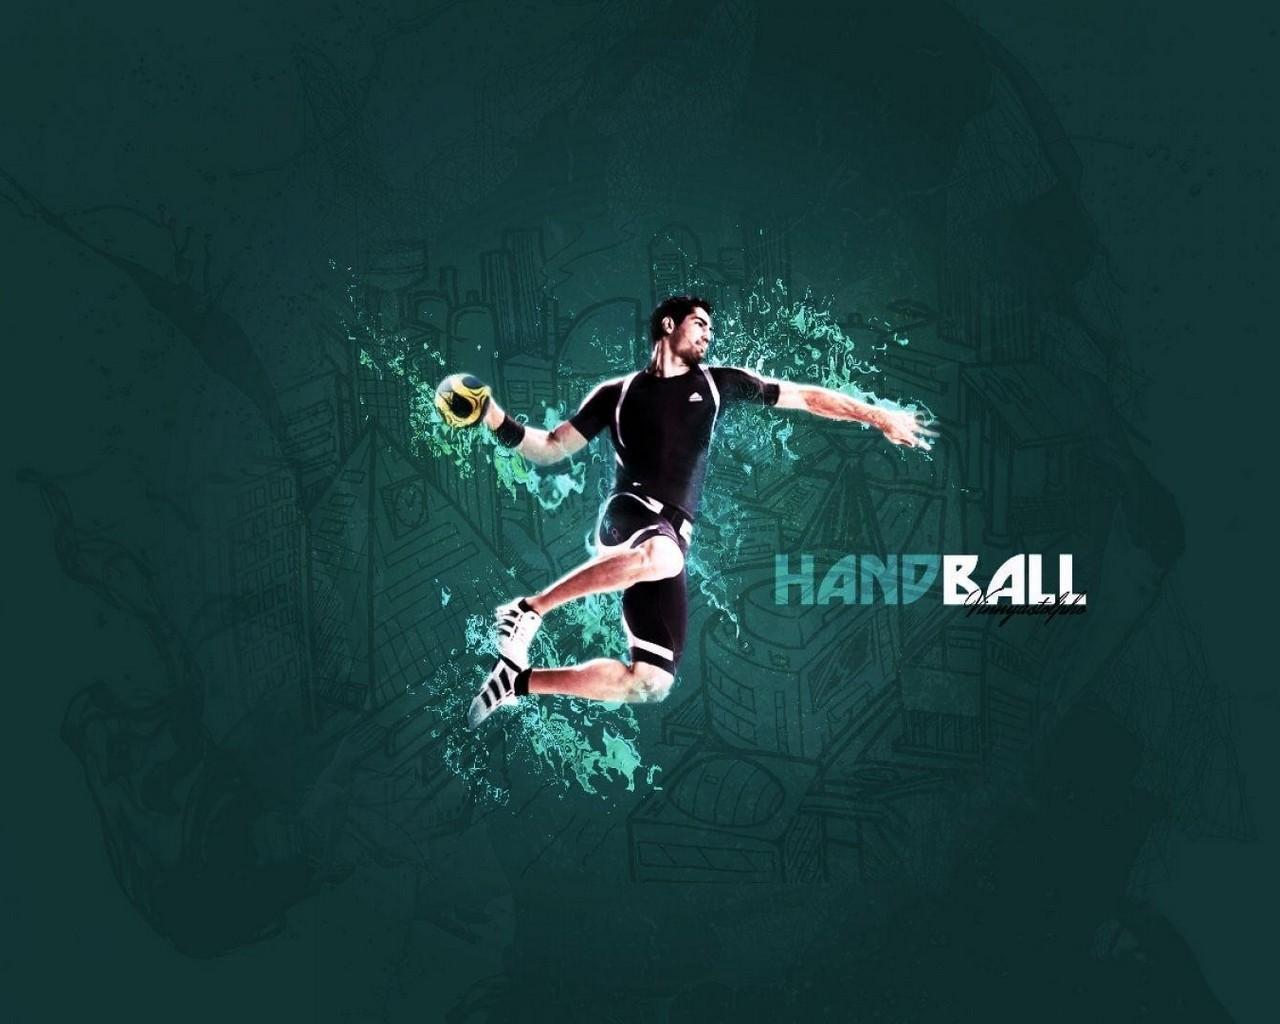 Handball New Wallpaper Themes For Android Apk